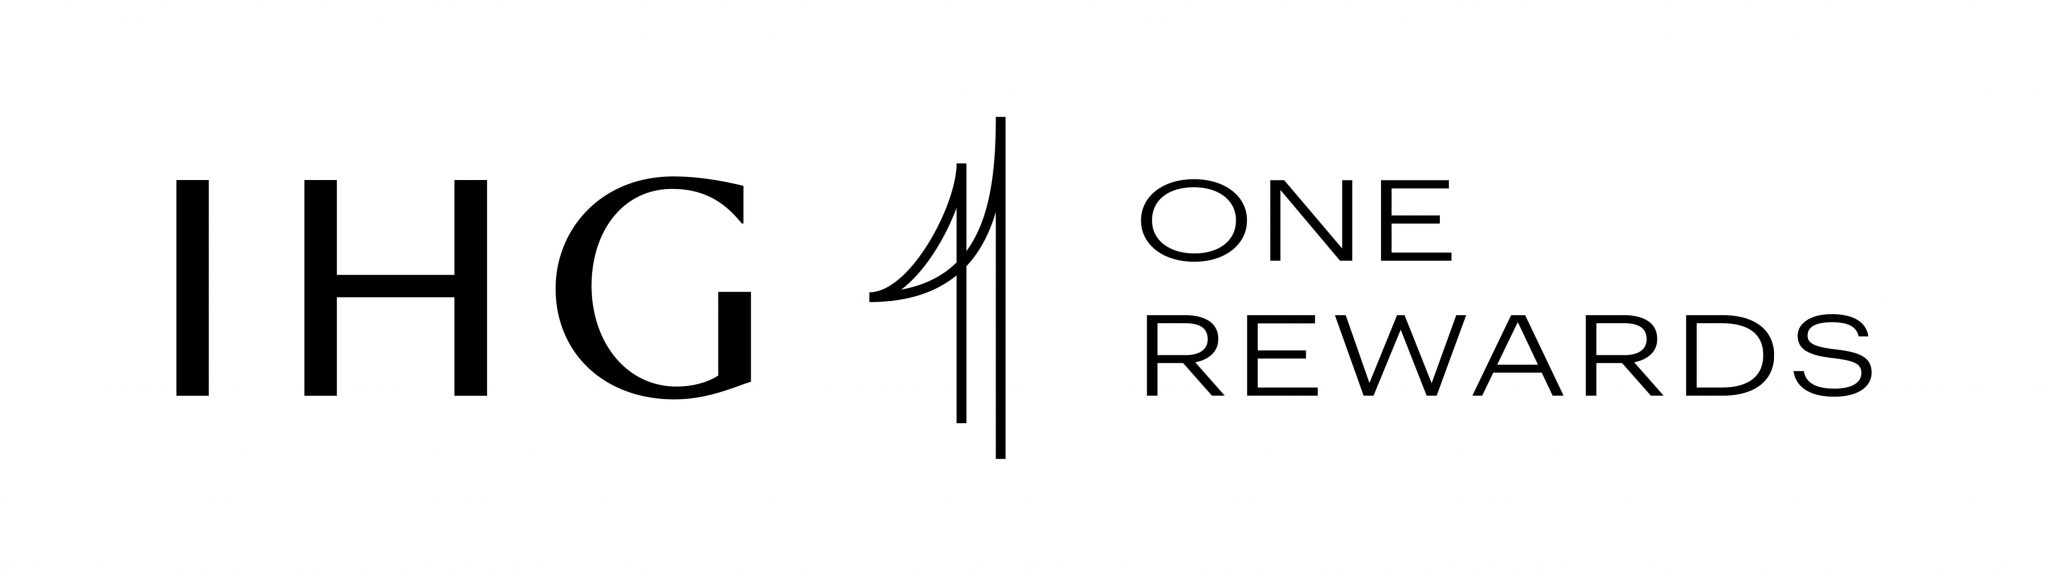 IHG One Rewards Logo 2048x576 